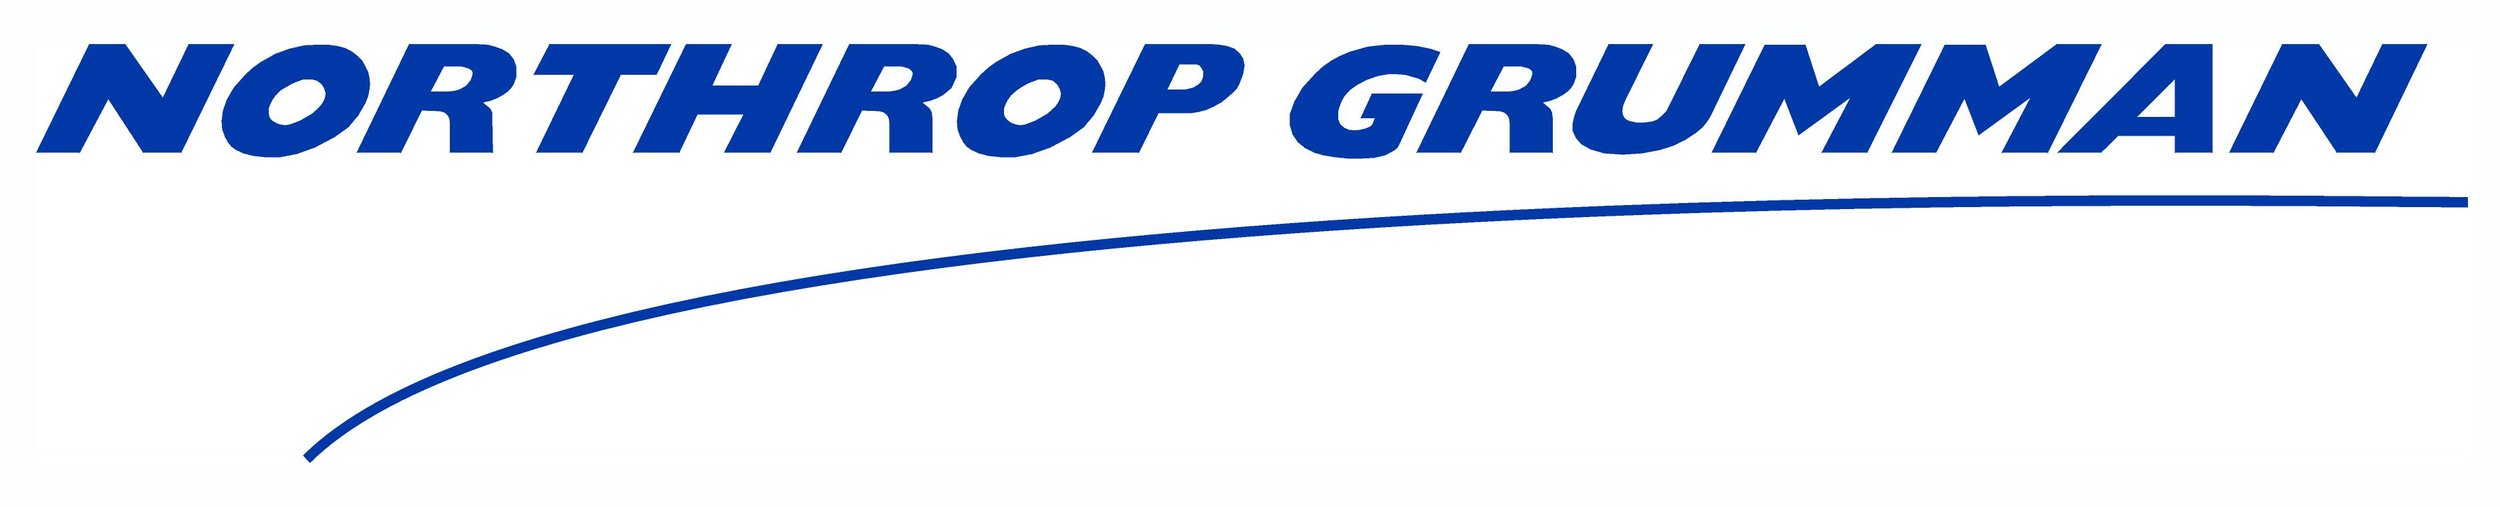 Northrop-Grumman-logo.jpg